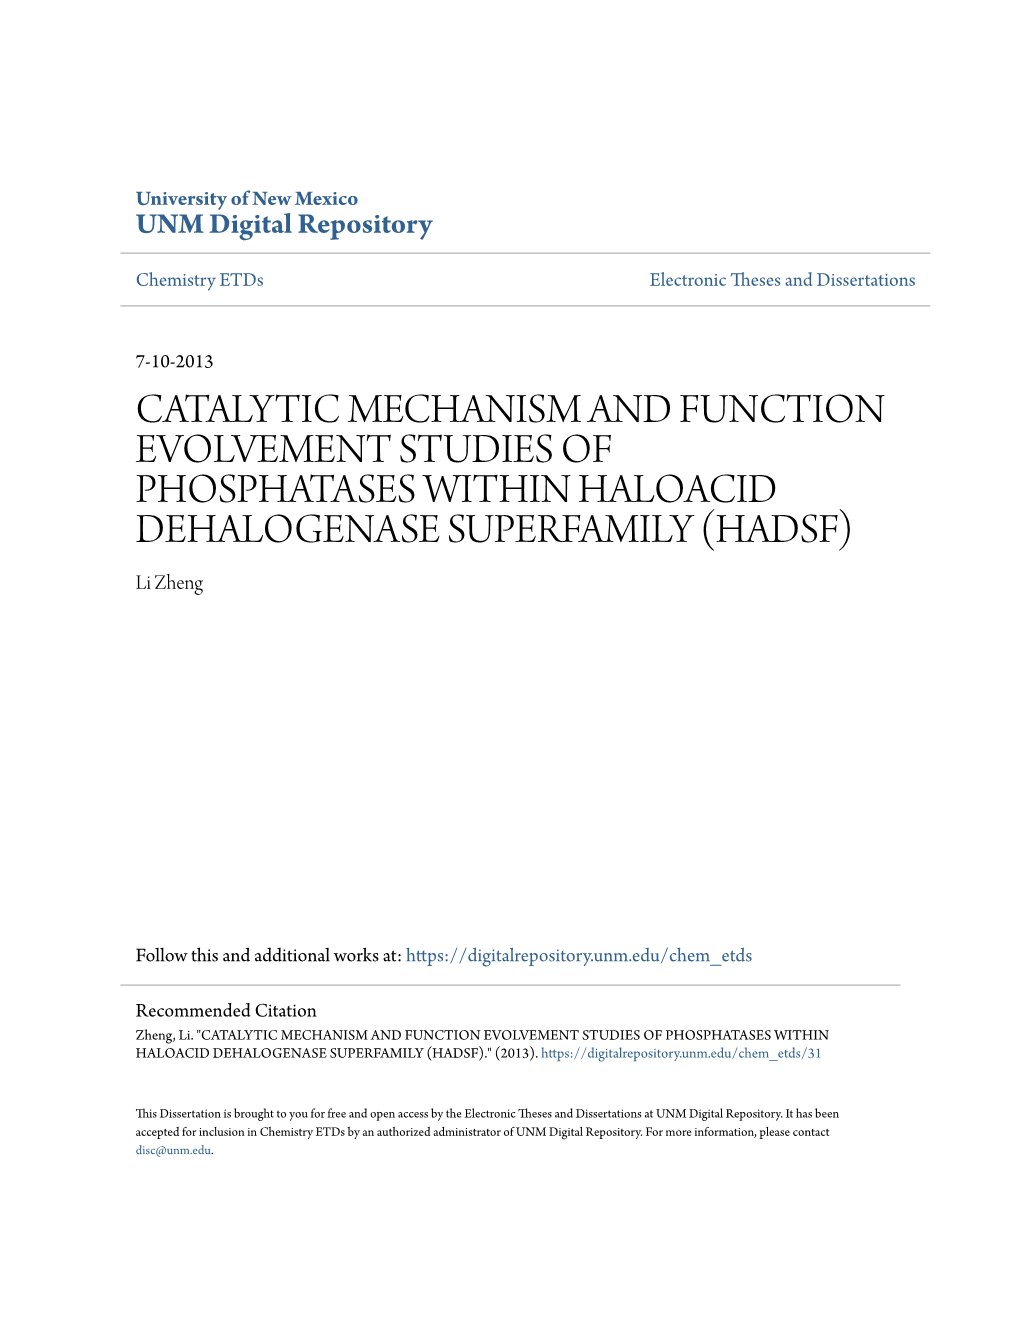 CATALYTIC MECHANISM and FUNCTION EVOLVEMENT STUDIES of PHOSPHATASES WITHIN HALOACID DEHALOGENASE SUPERFAMILY (HADSF) Li Zheng